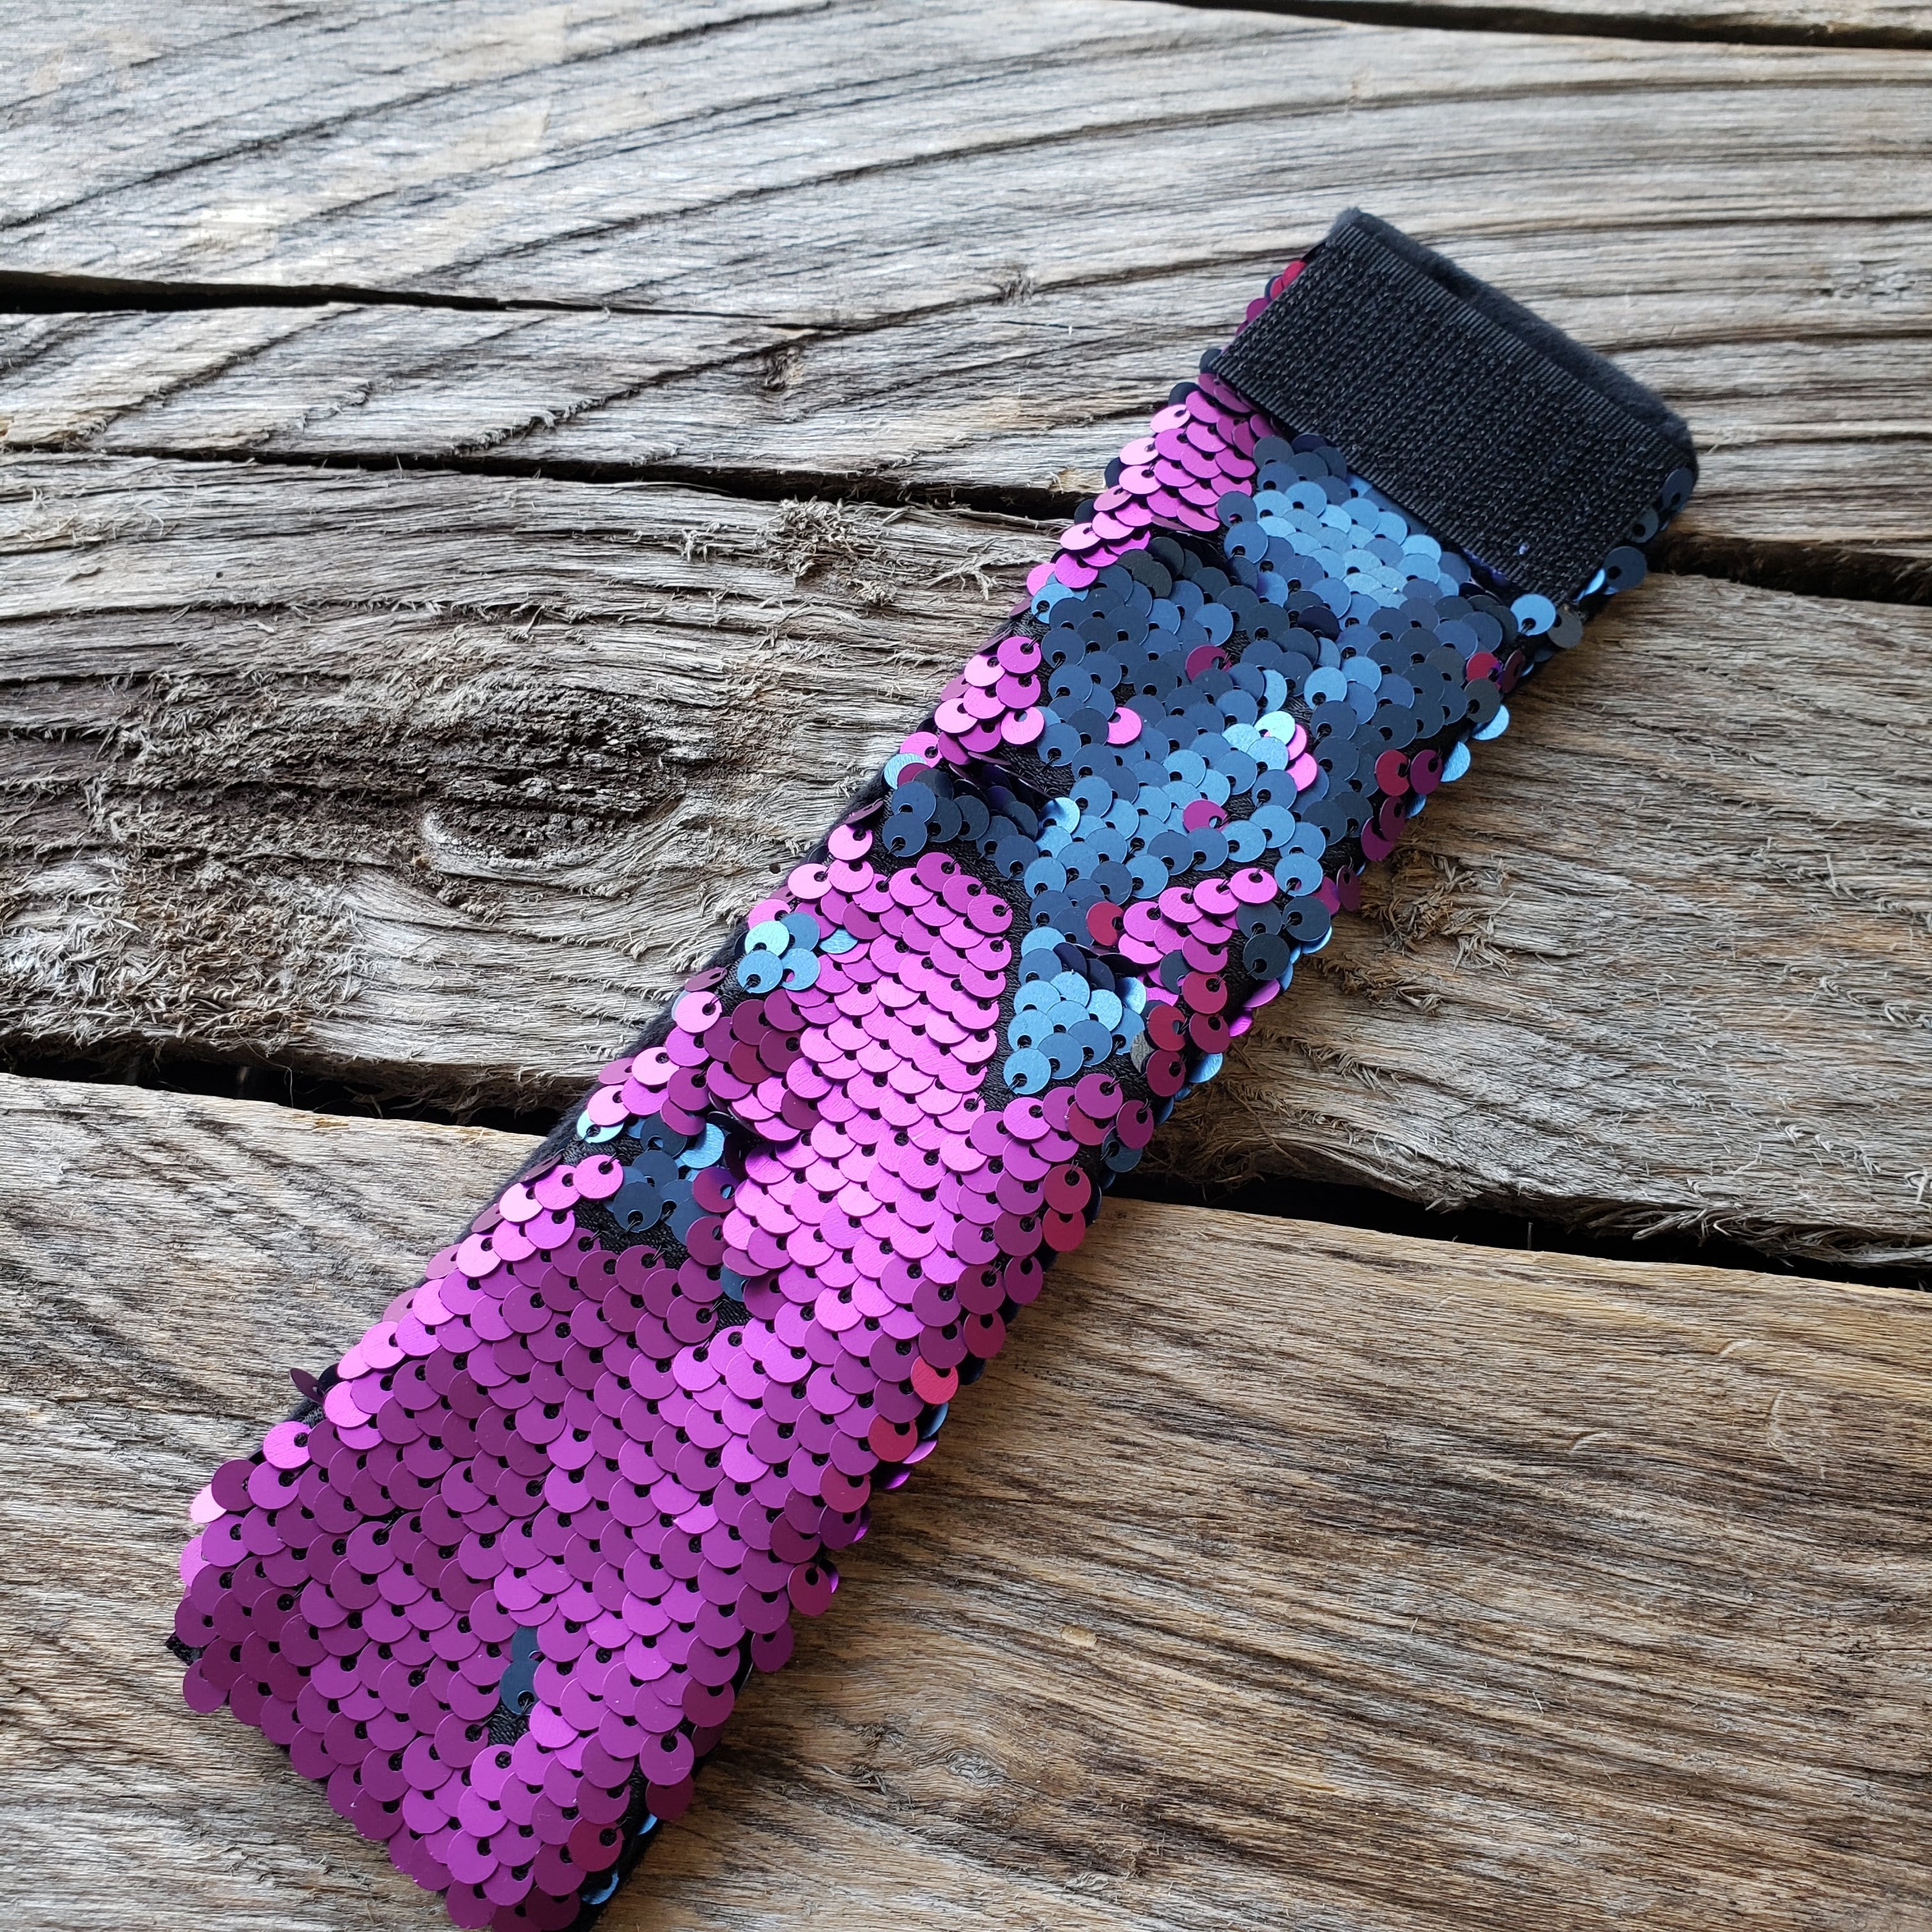 Superhero Wrist Wrap or Mermaid Sequin Bracelet - Pink/Carbon-Design Blanks